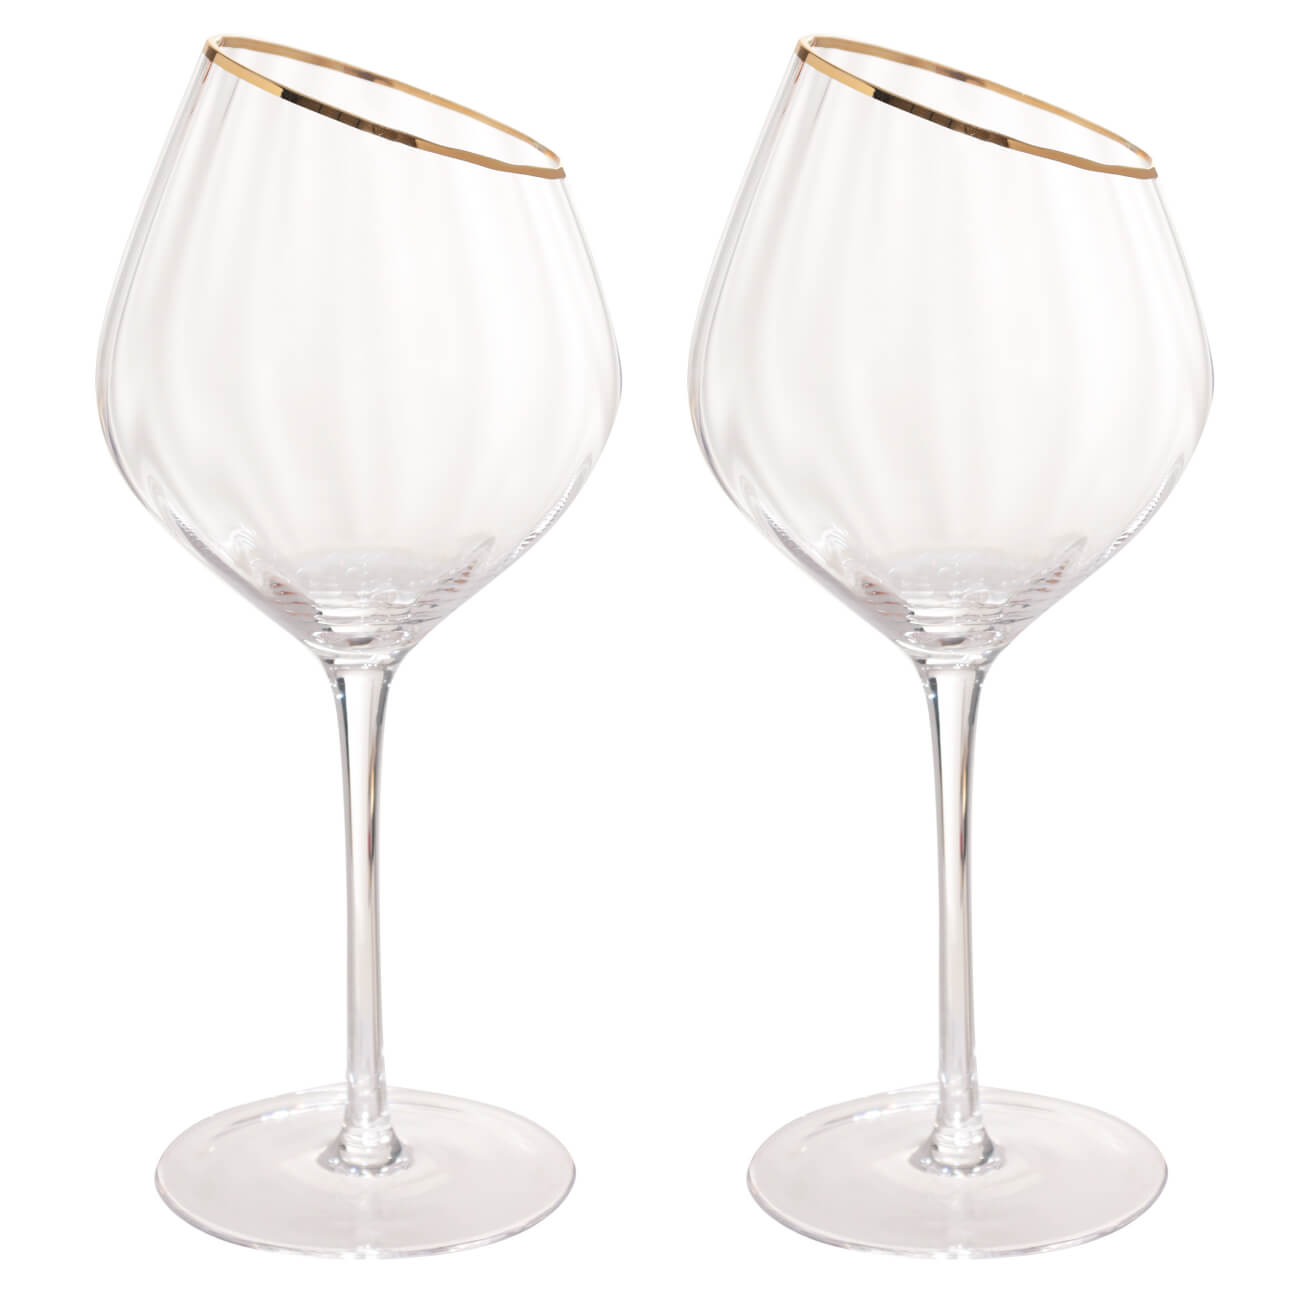 Бокал для красного вина, 560 мл, 2 шт, стекло, с золотистым кантом, Charm R gold ваза для ов 25 см стекло с золотистым кантом berg